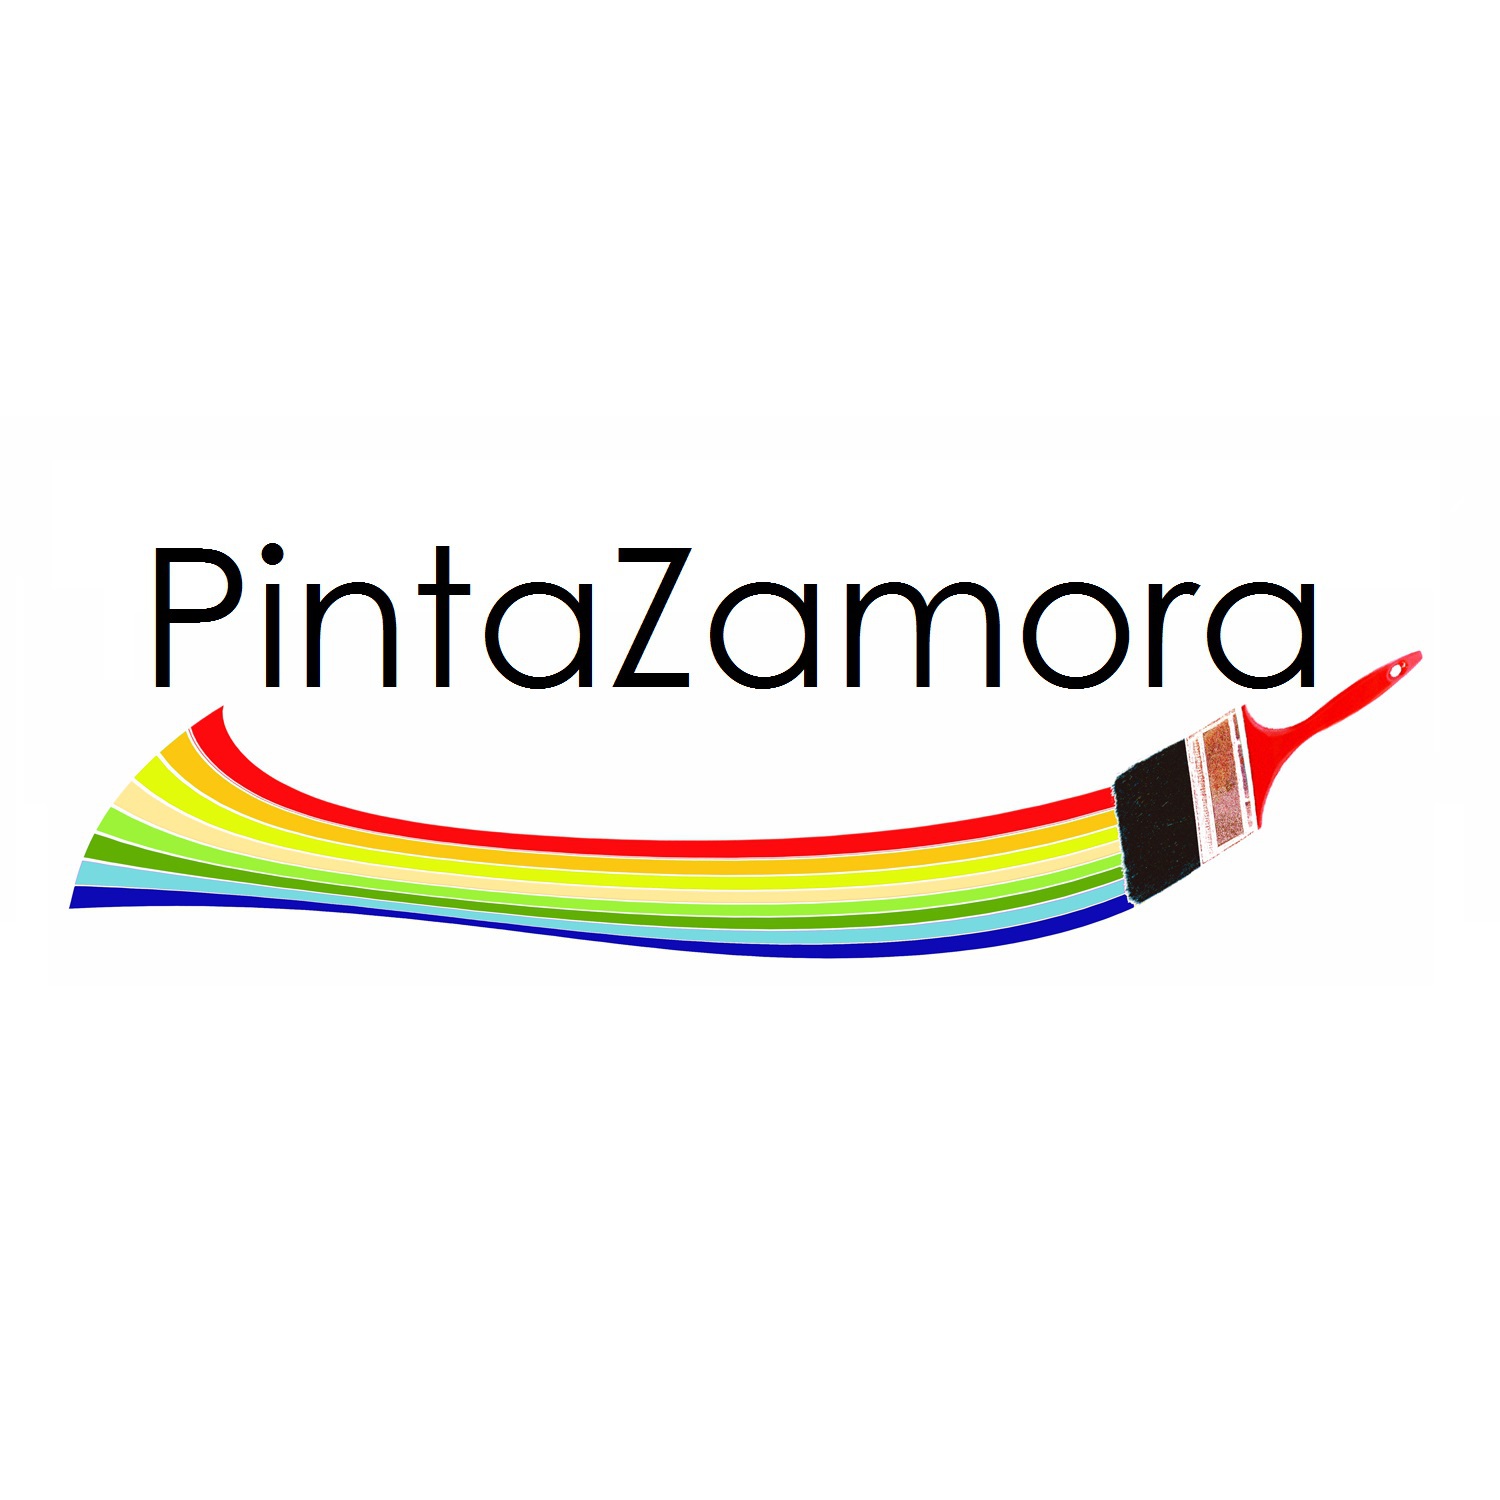 PintaZamora Logo